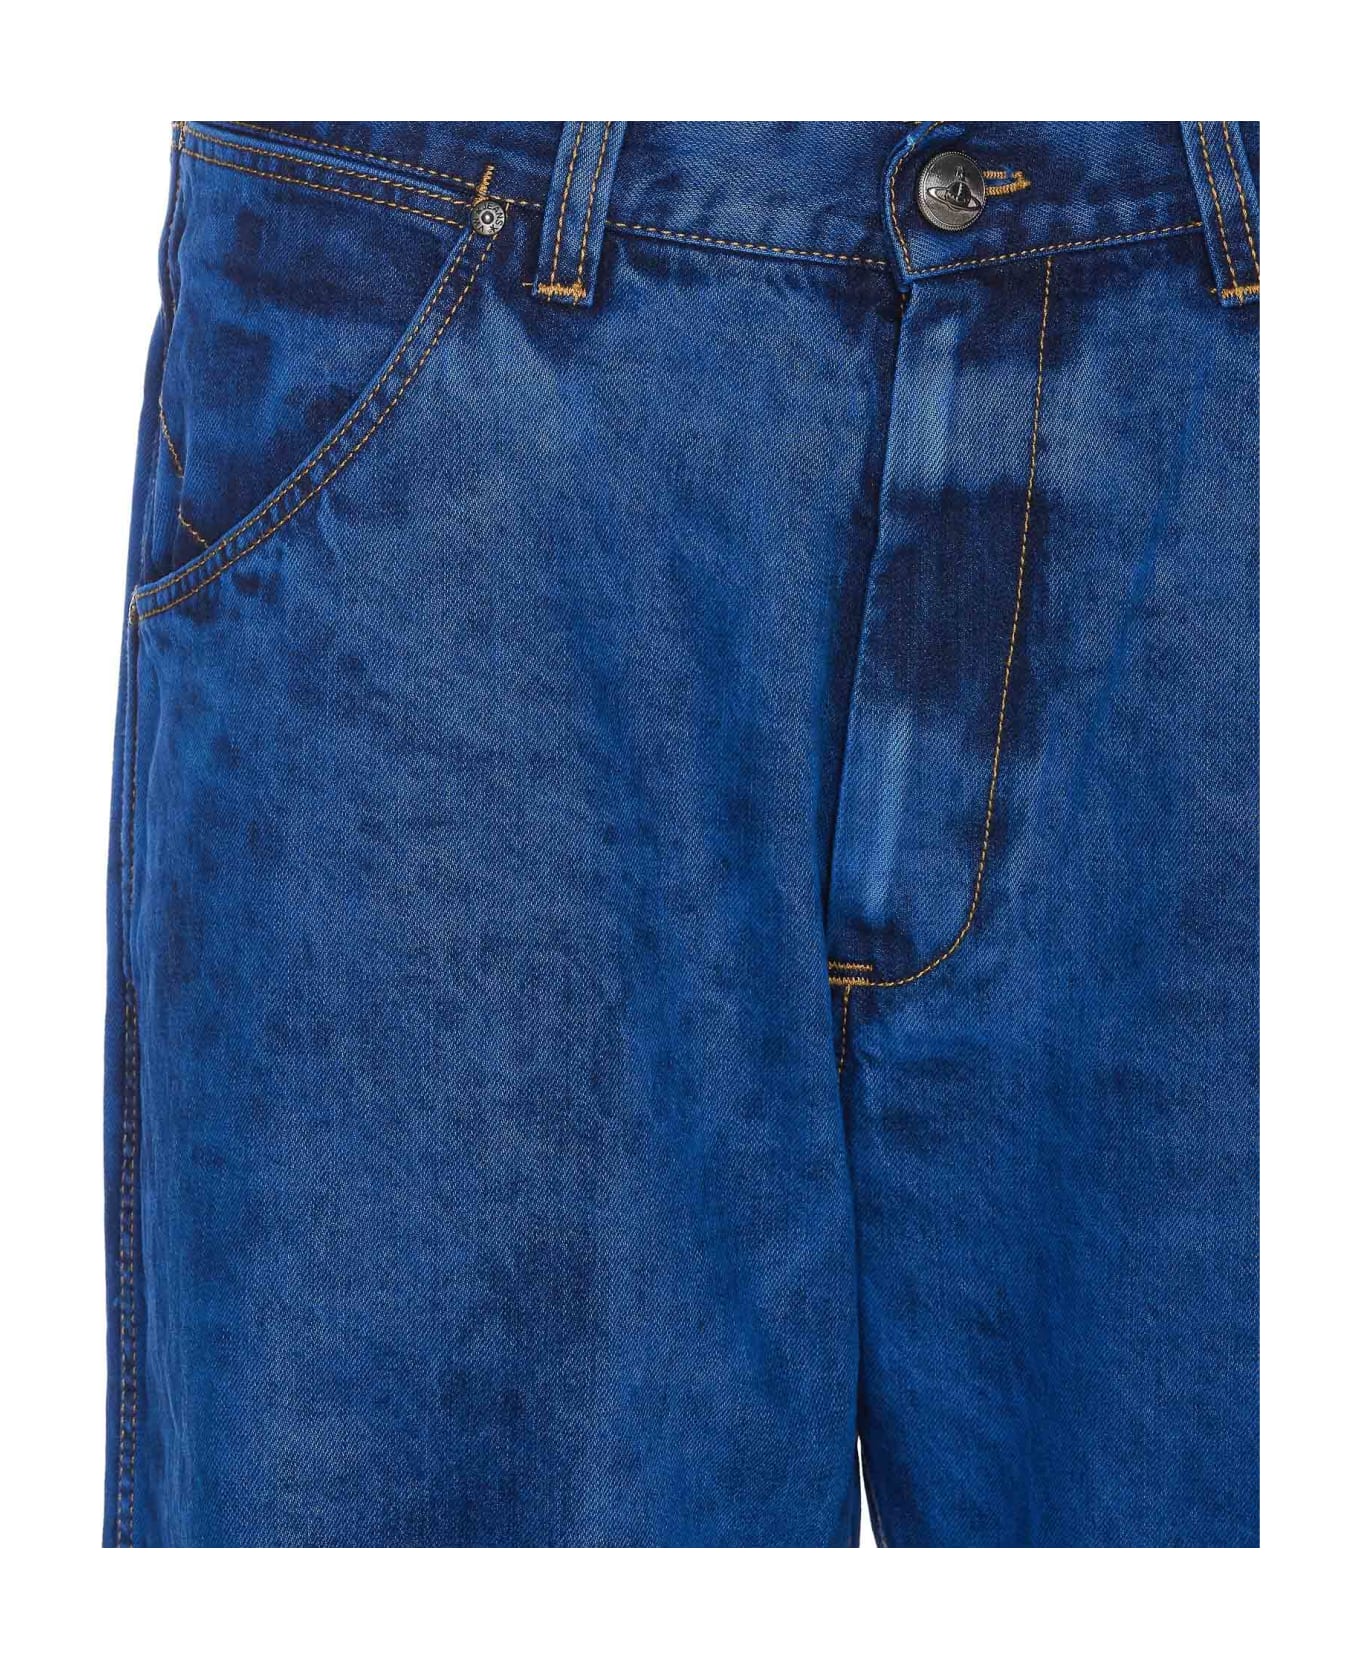 Vivienne Westwood Ranch Jeans - Blue デニム